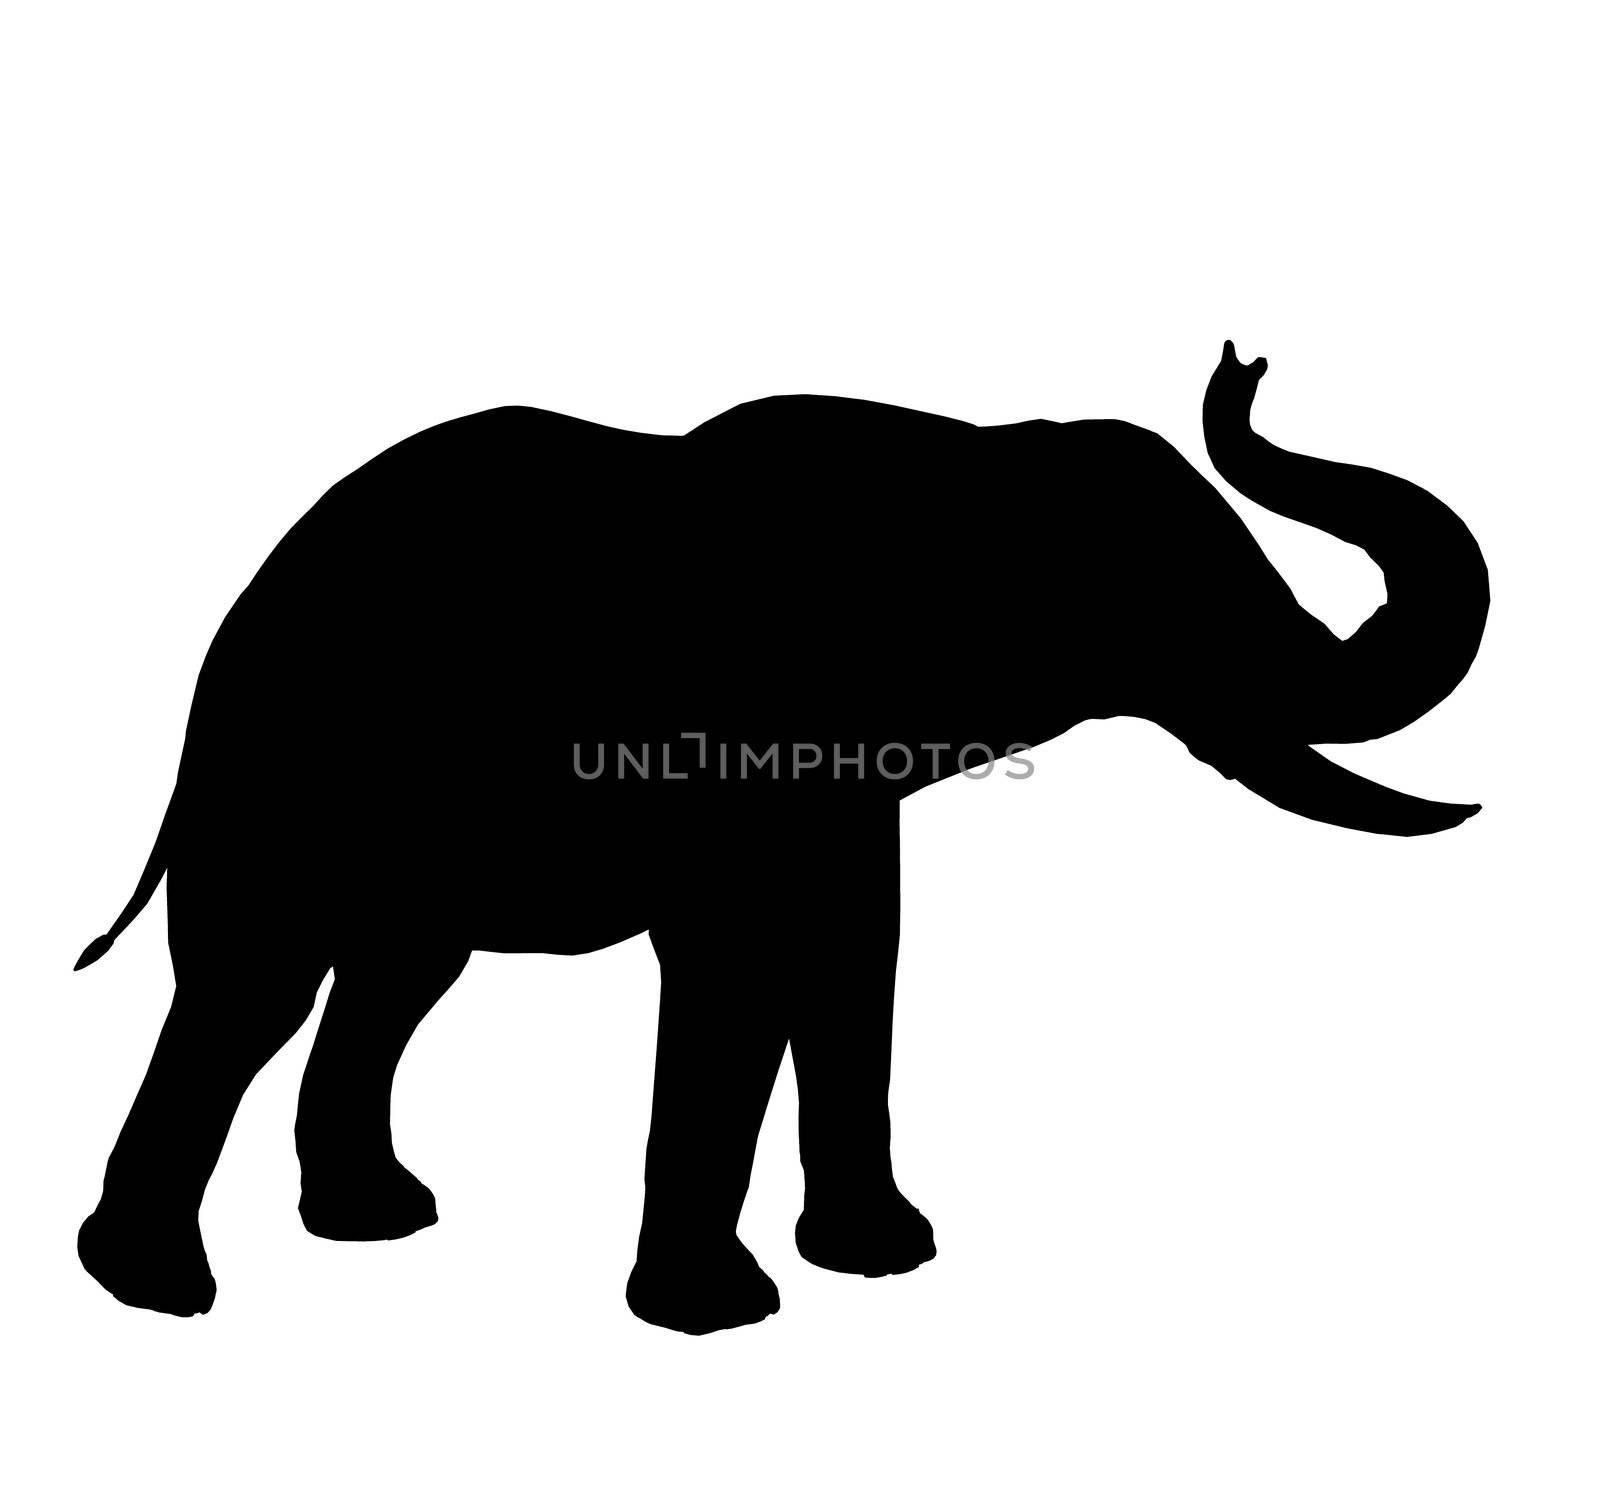 Black elephant art illustration silhouette on a white background